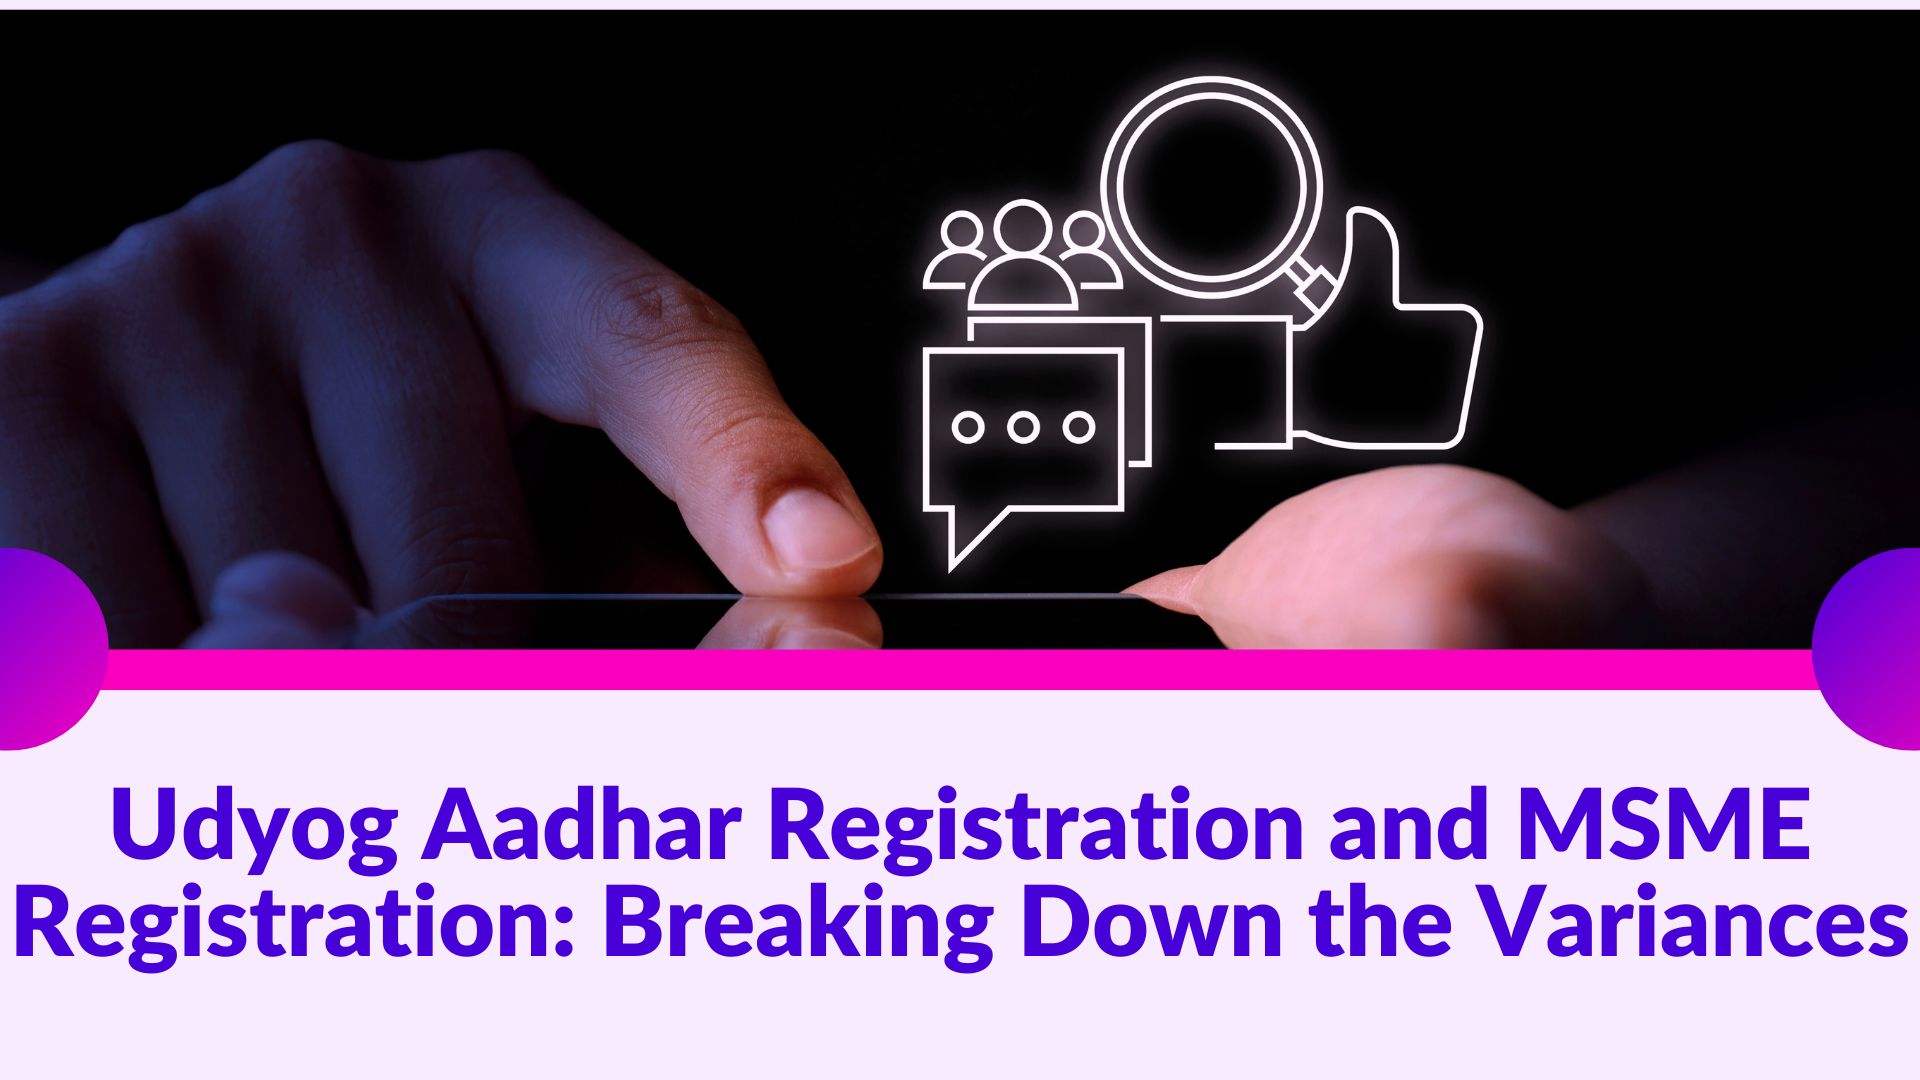 Udyog Aadhar Registration and MSME Registration: Breaking Down the Variances